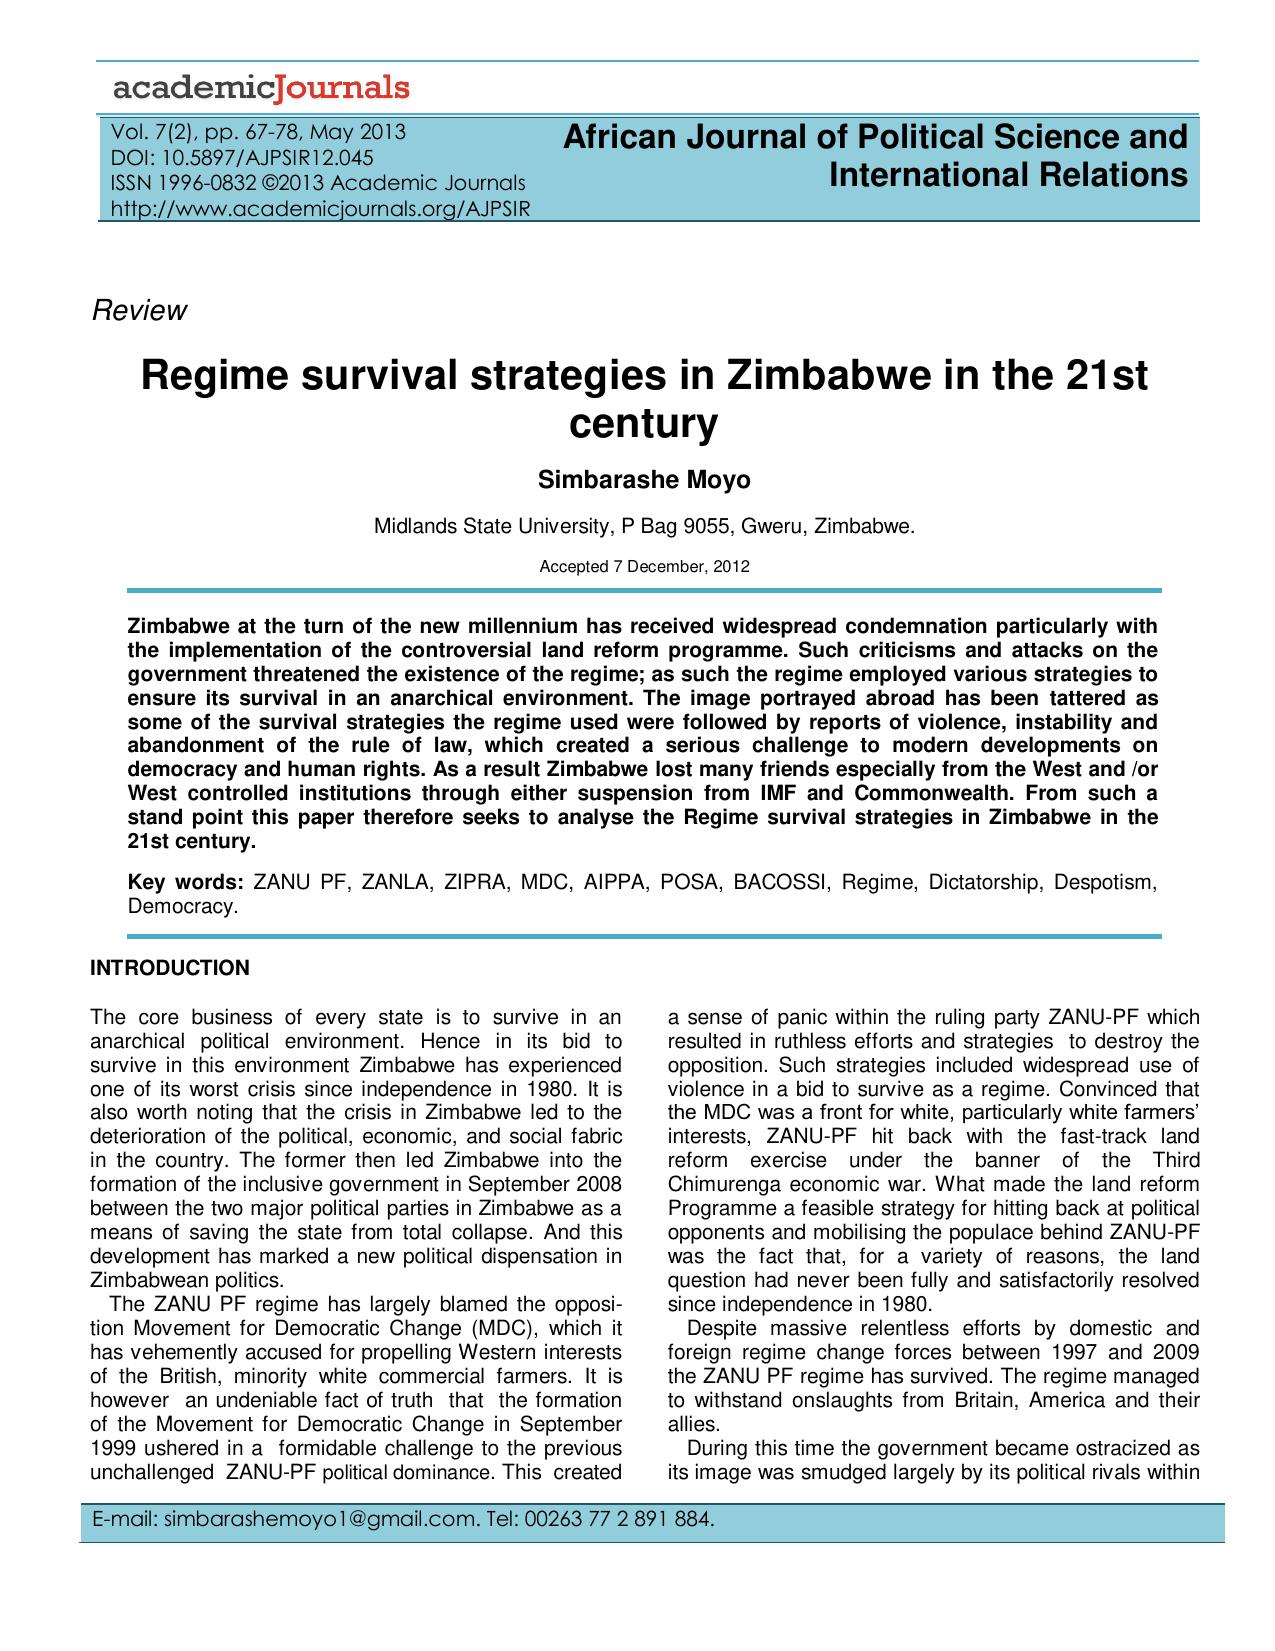 Regime survival strategies in Zimbabwe in the 21st